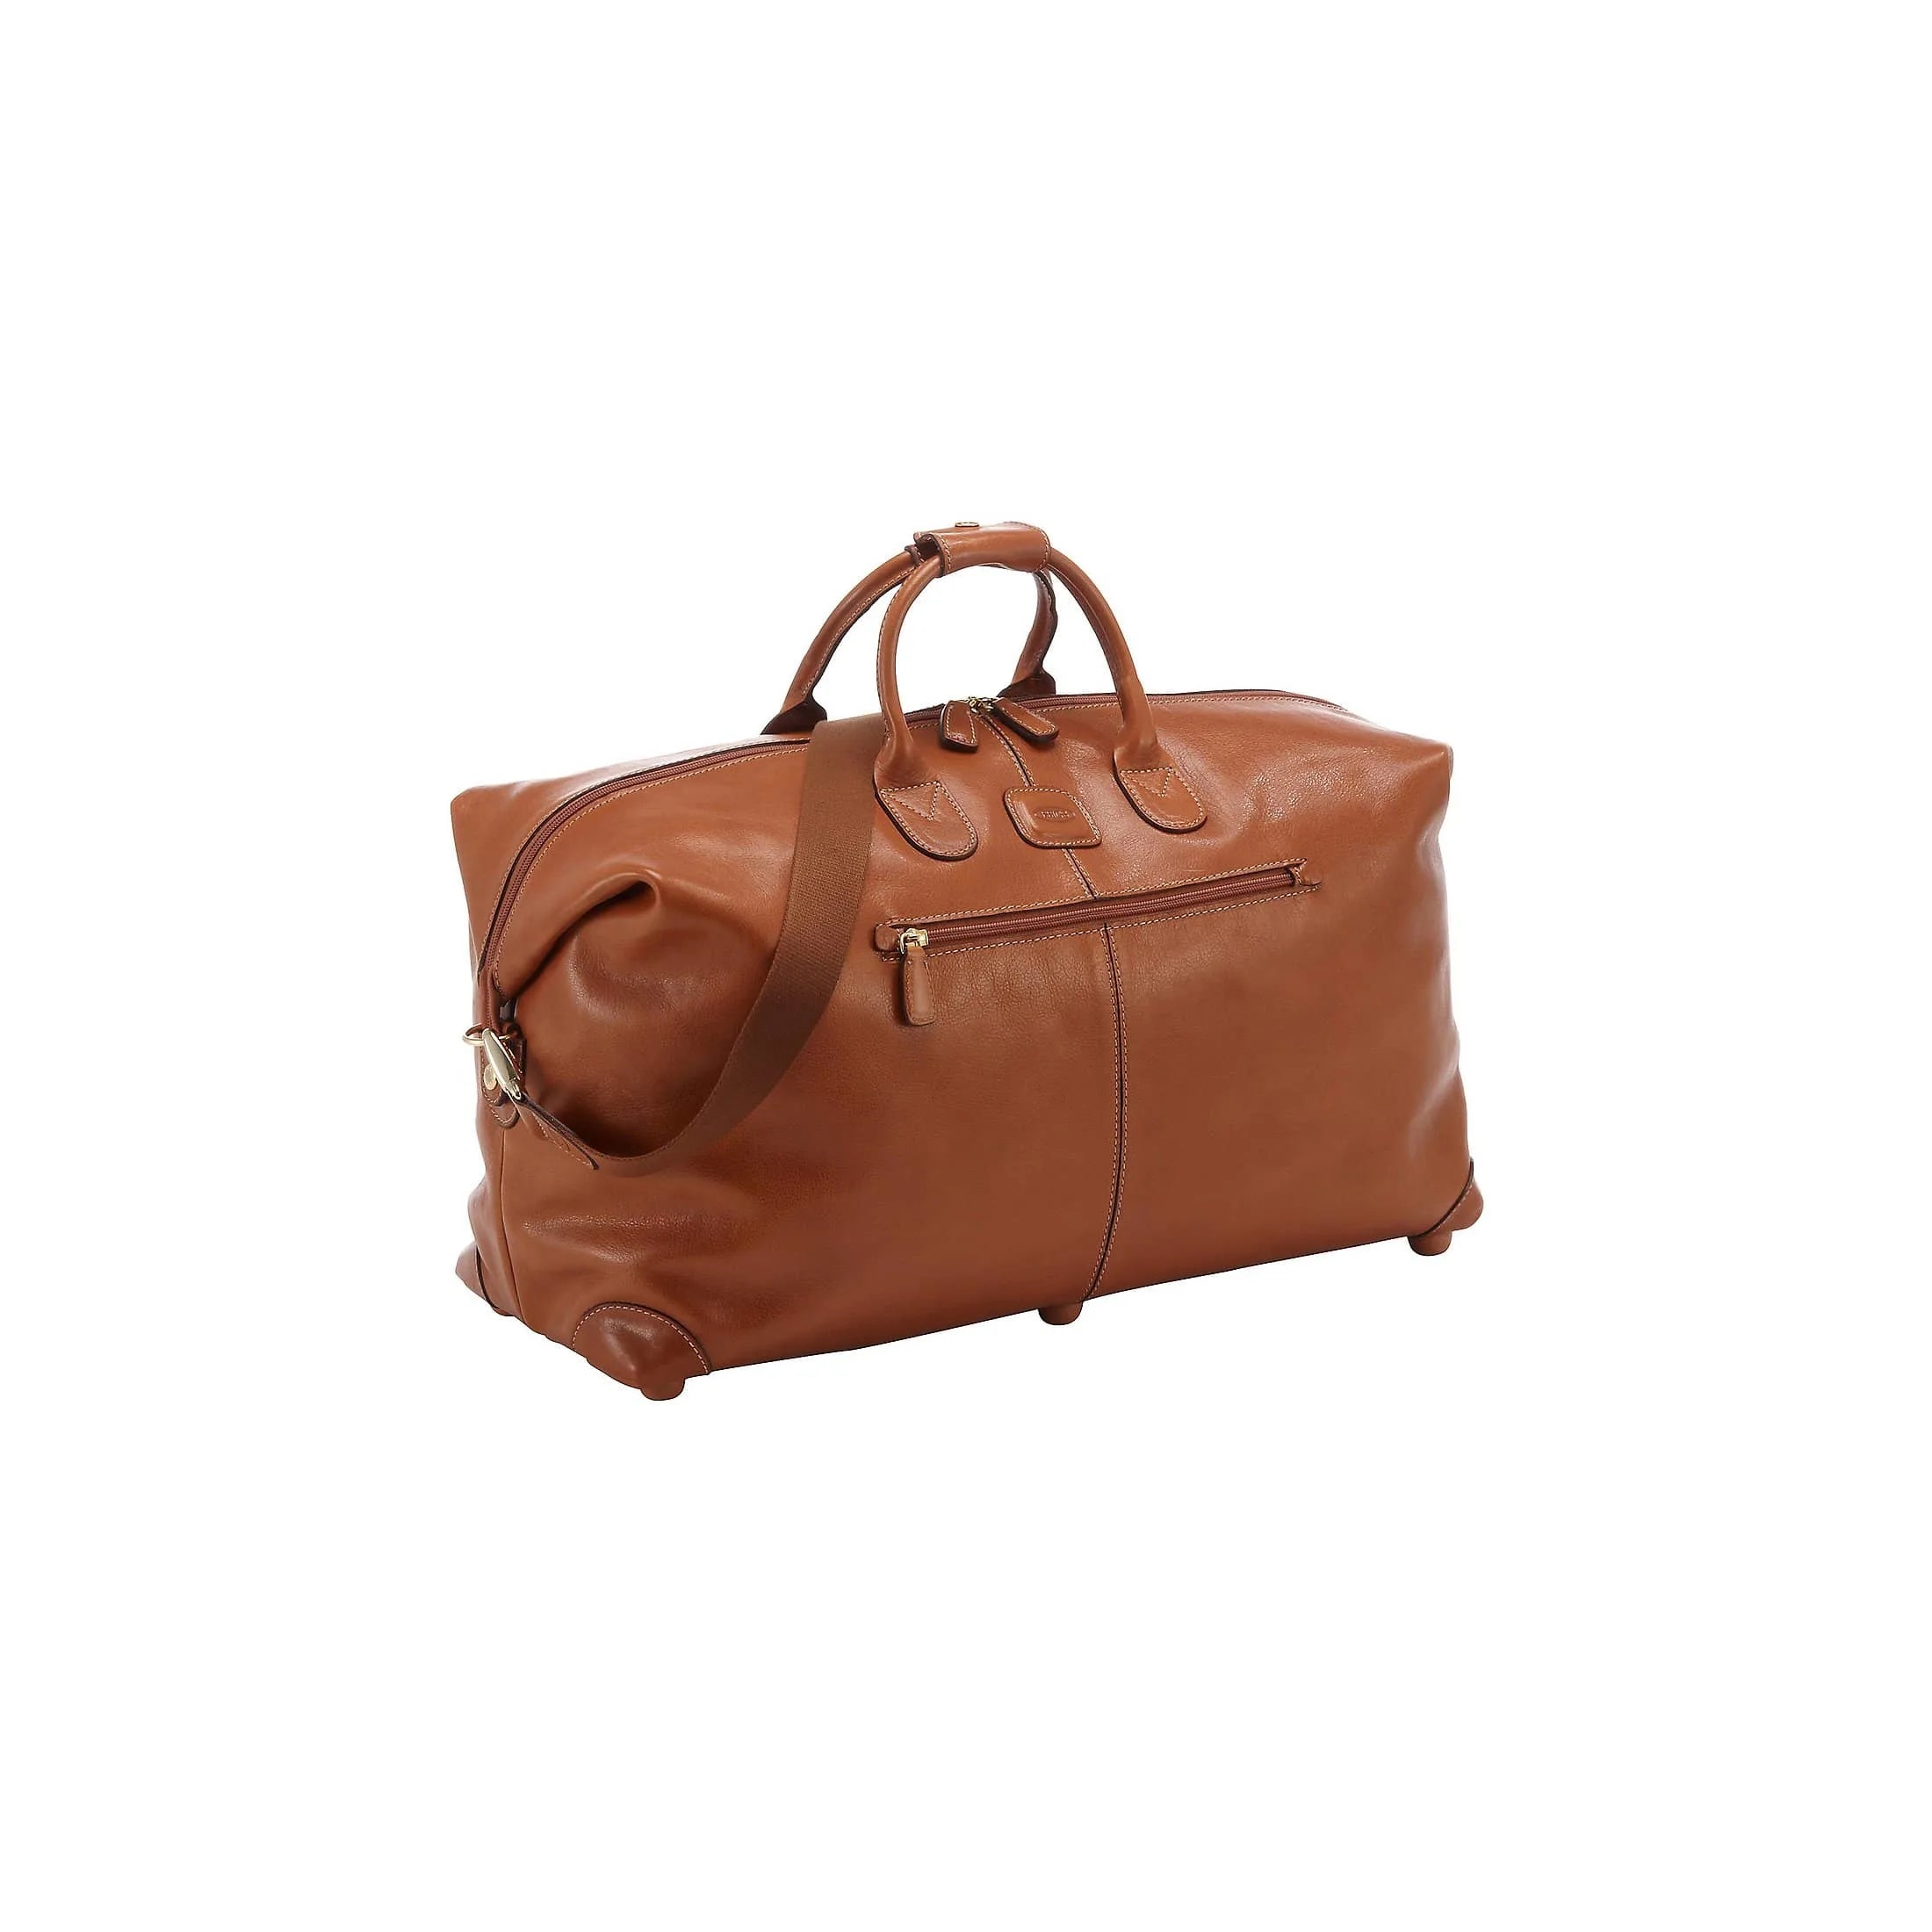 Brics Life Pelle leather travel bag 55 cm - cognac